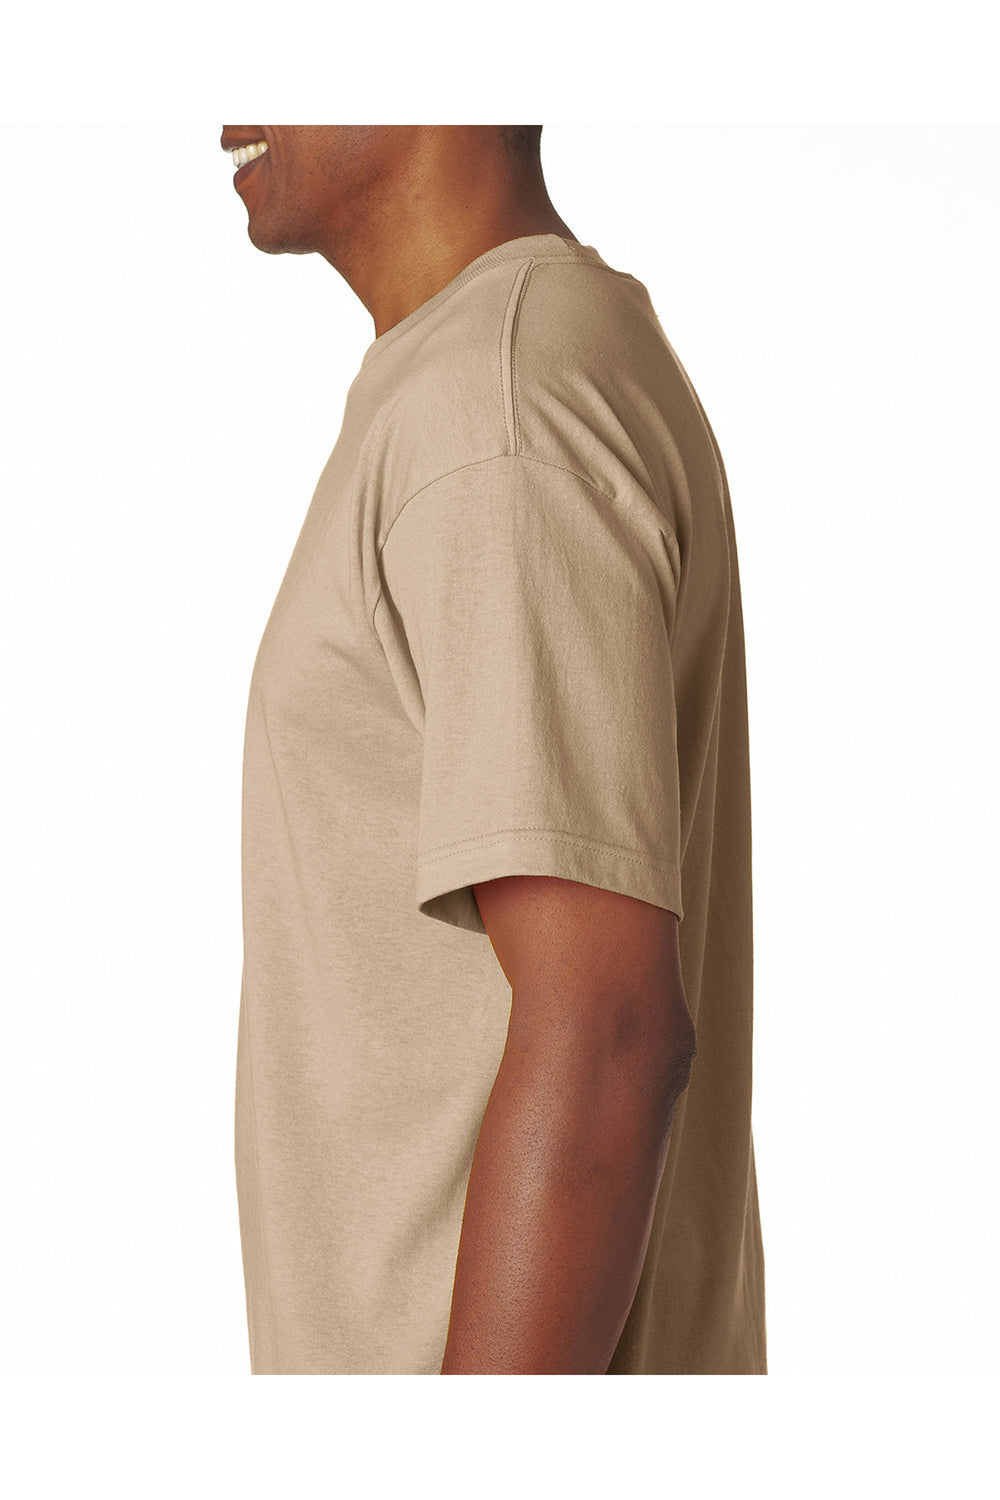 Bayside BA5100 Mens USA Made Short Sleeve Crewneck T-Shirt Sand Model Side